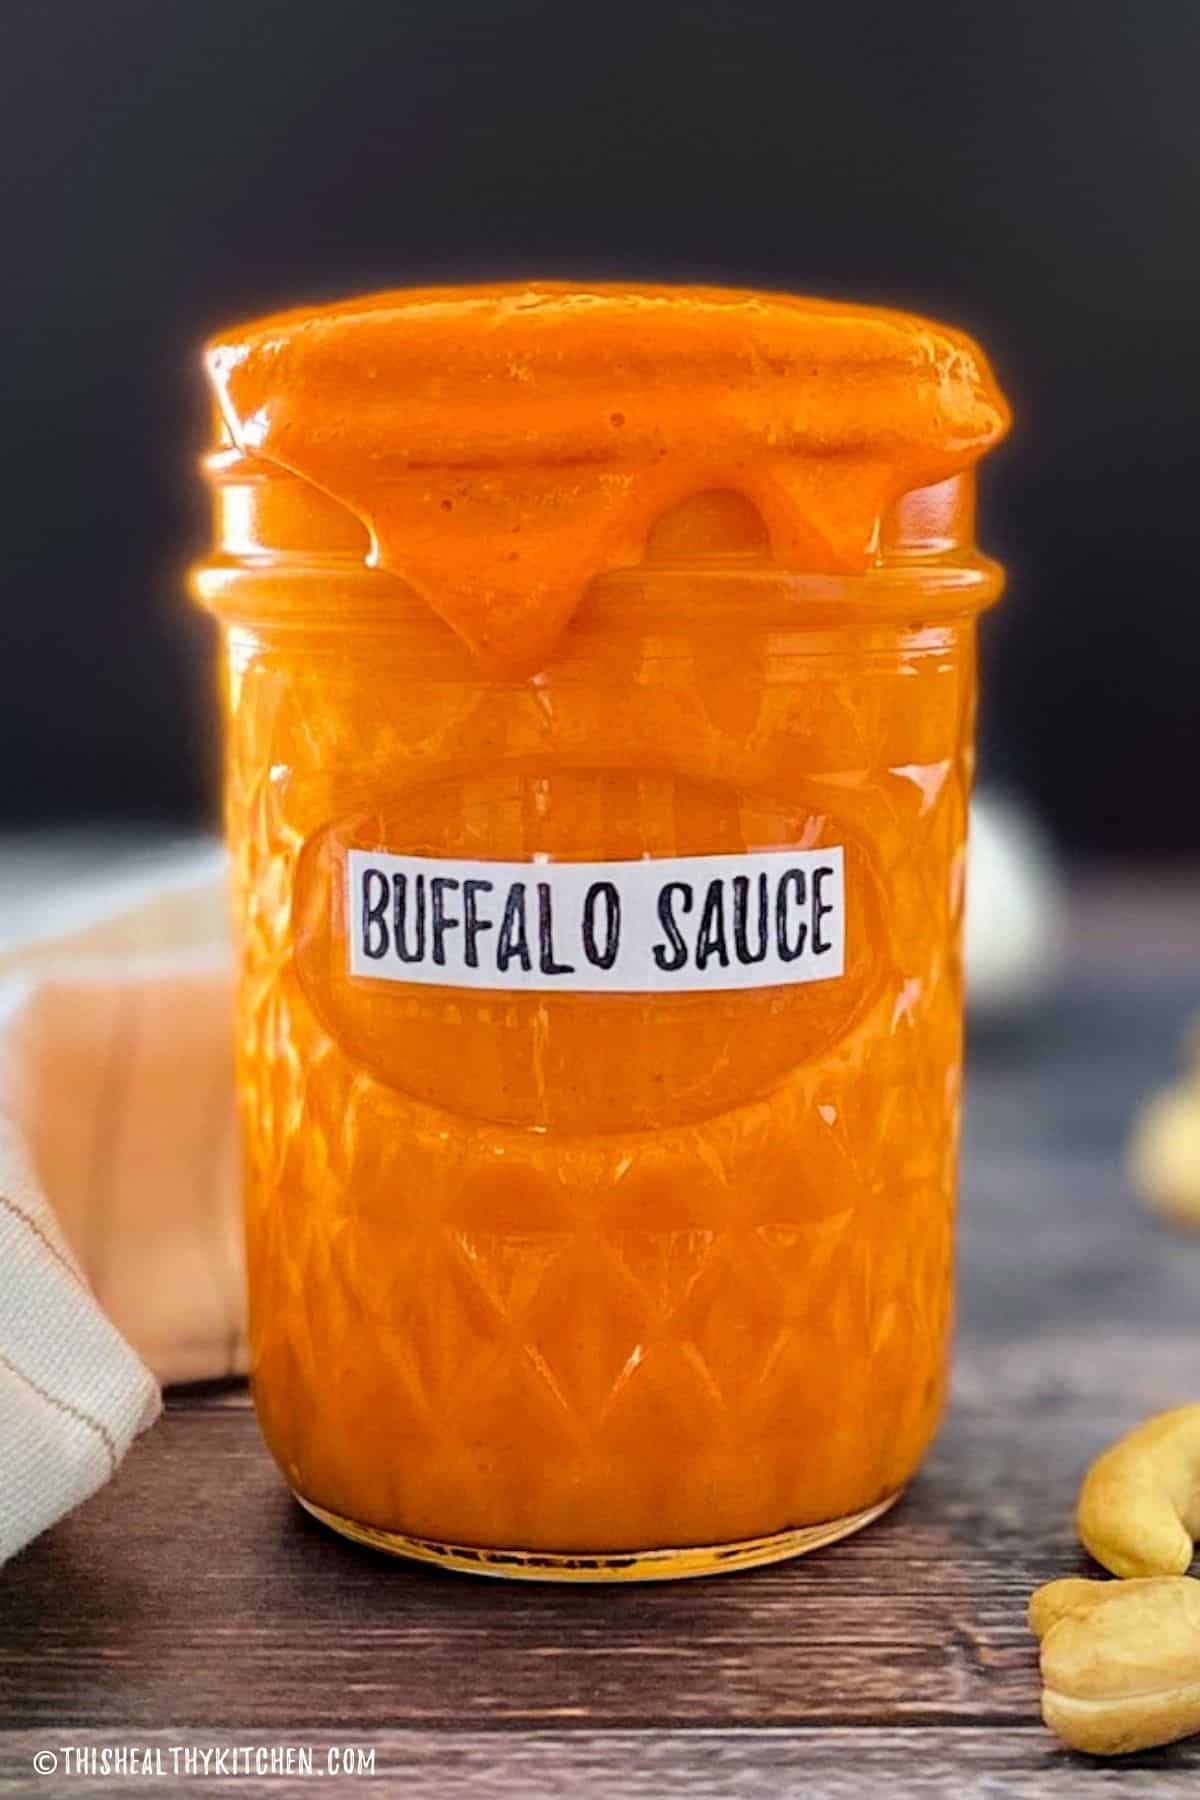 Glass jar with buffalo sauce inside.